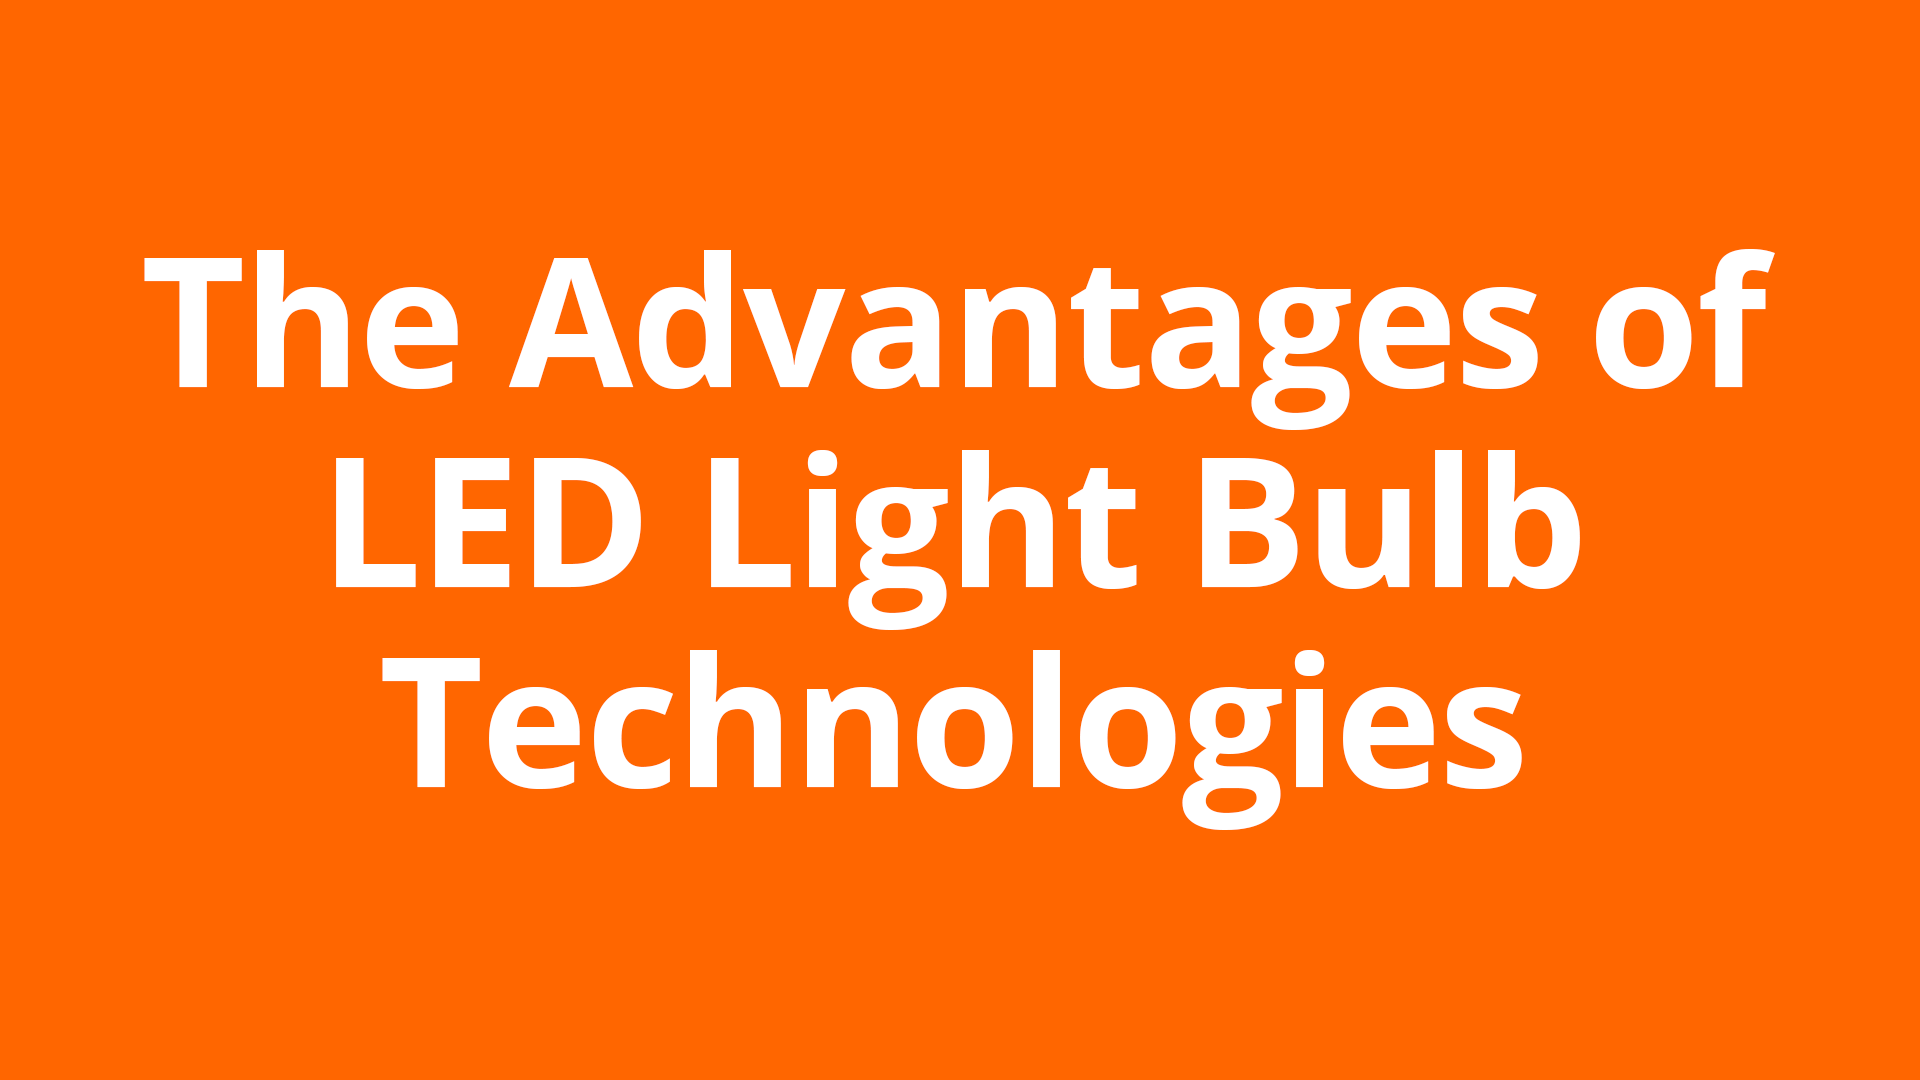 The Advantages of LED Light Bulb Technologies